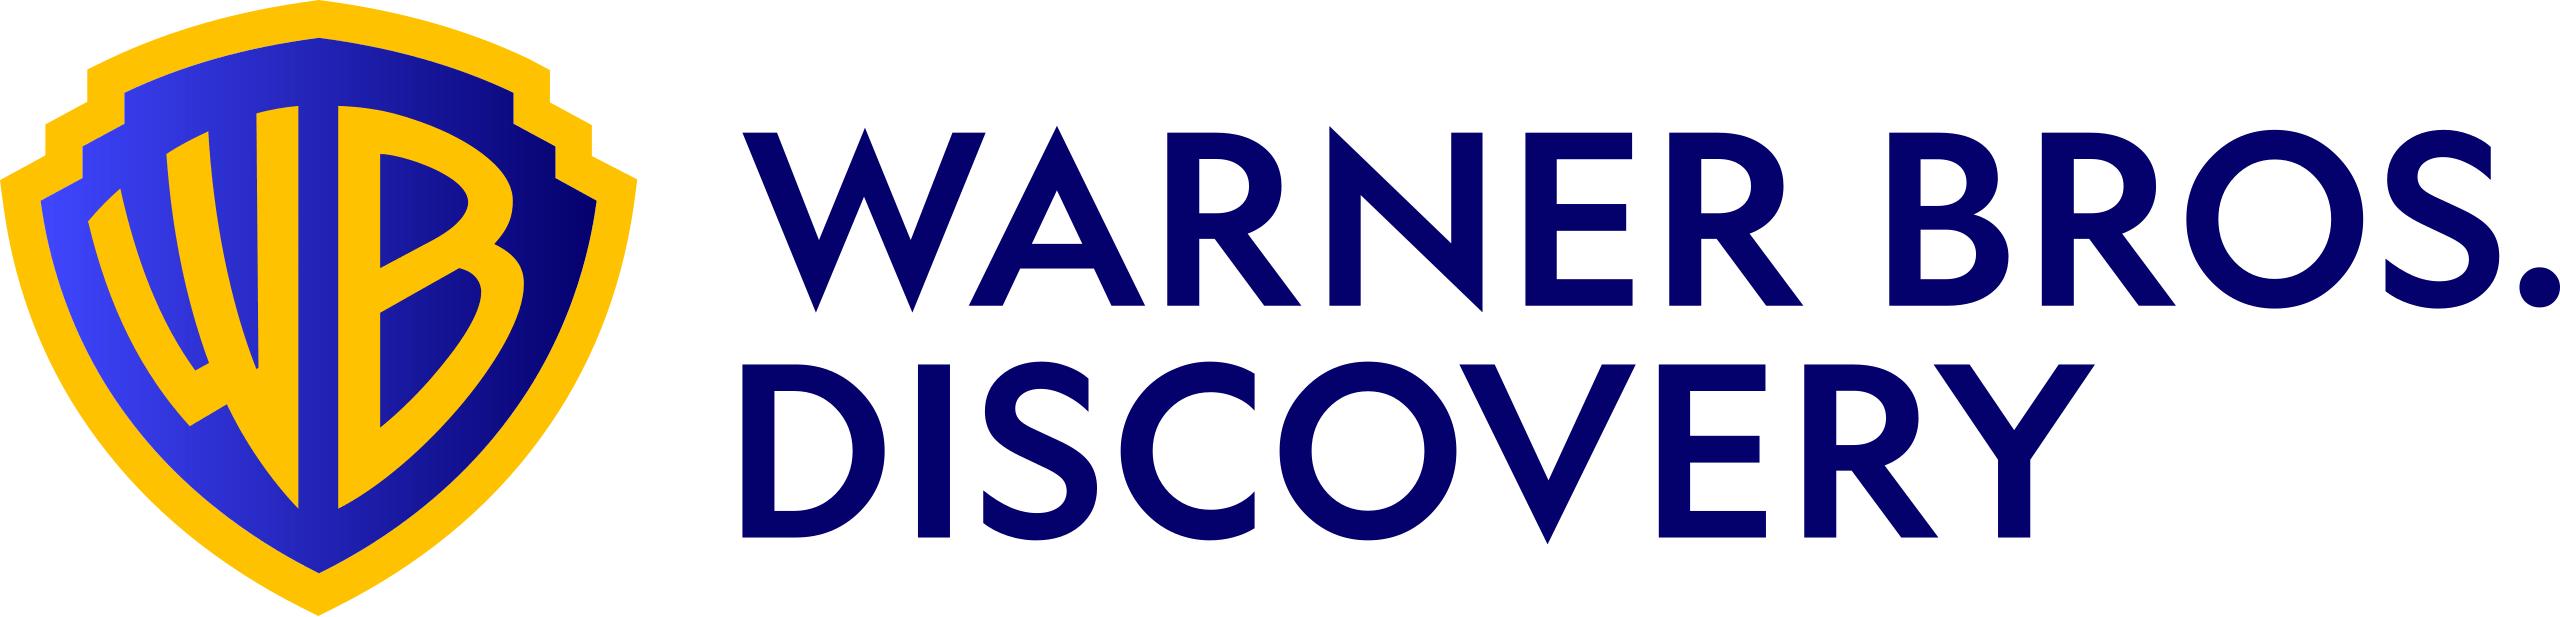 Il logo Warner Bros. Discovery